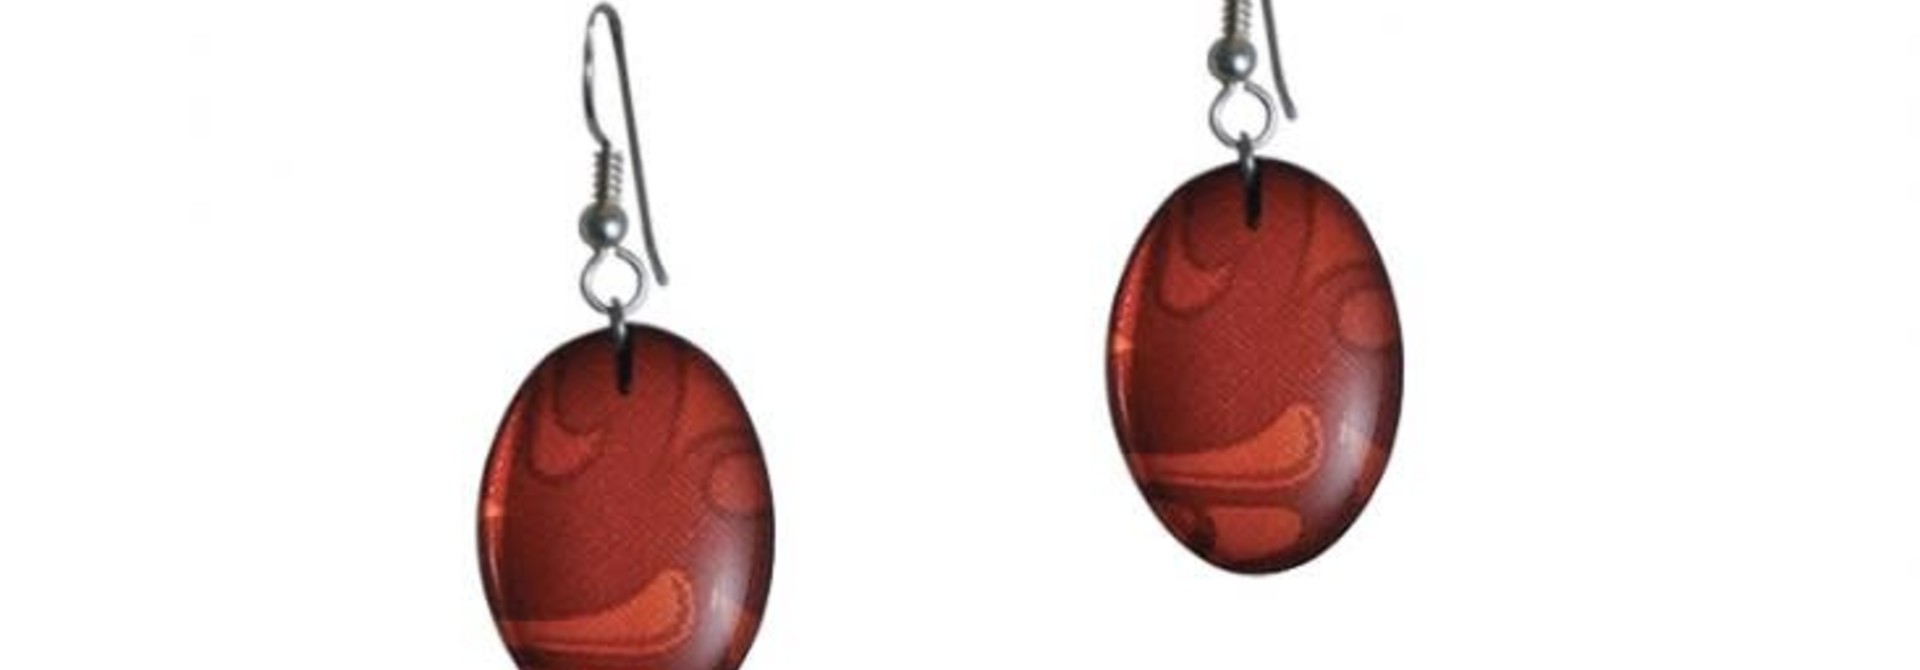 Corrine Hunt Silk Inspiration Oval Earrings Red